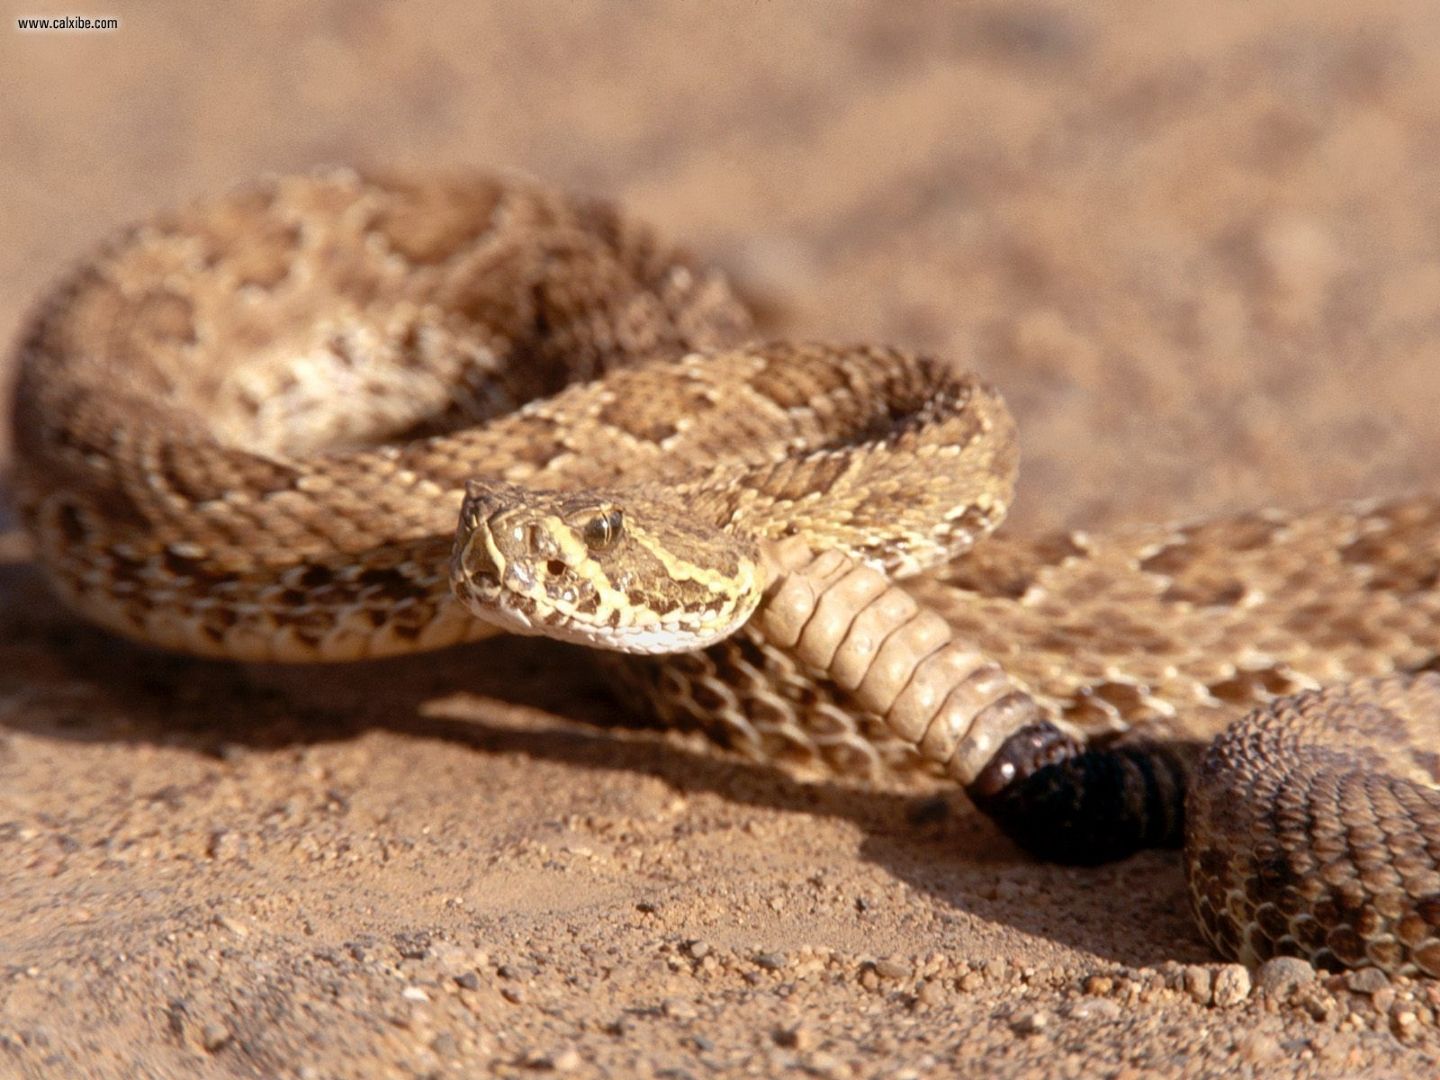 Baby rattle snake photos dowload